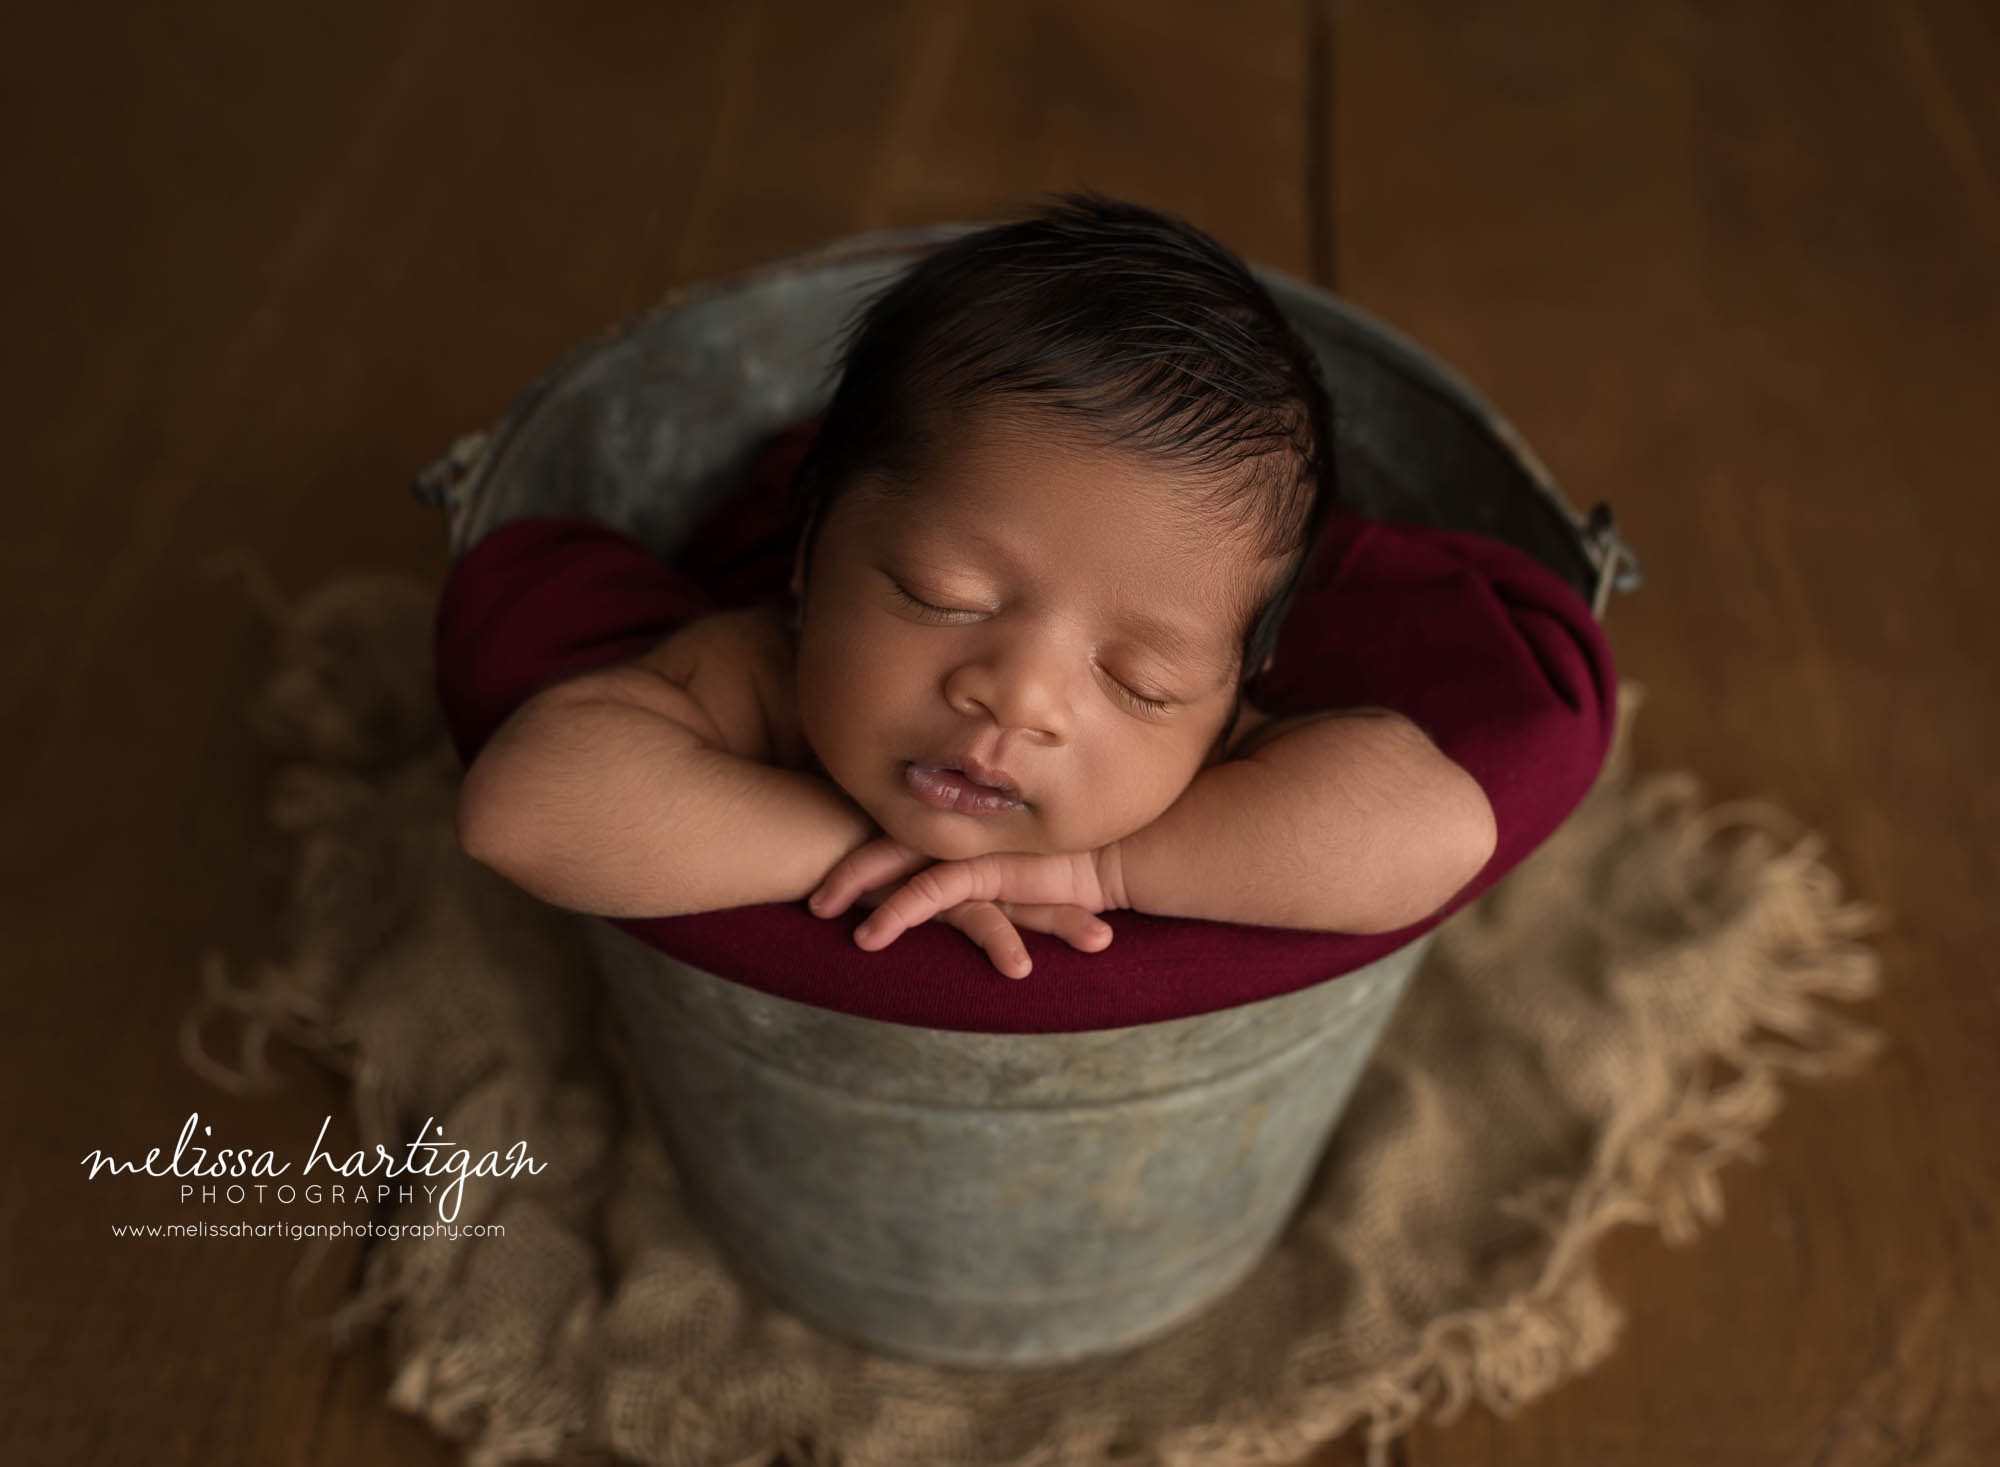 newborn baby boy posed in bucket connecticut newborn photography